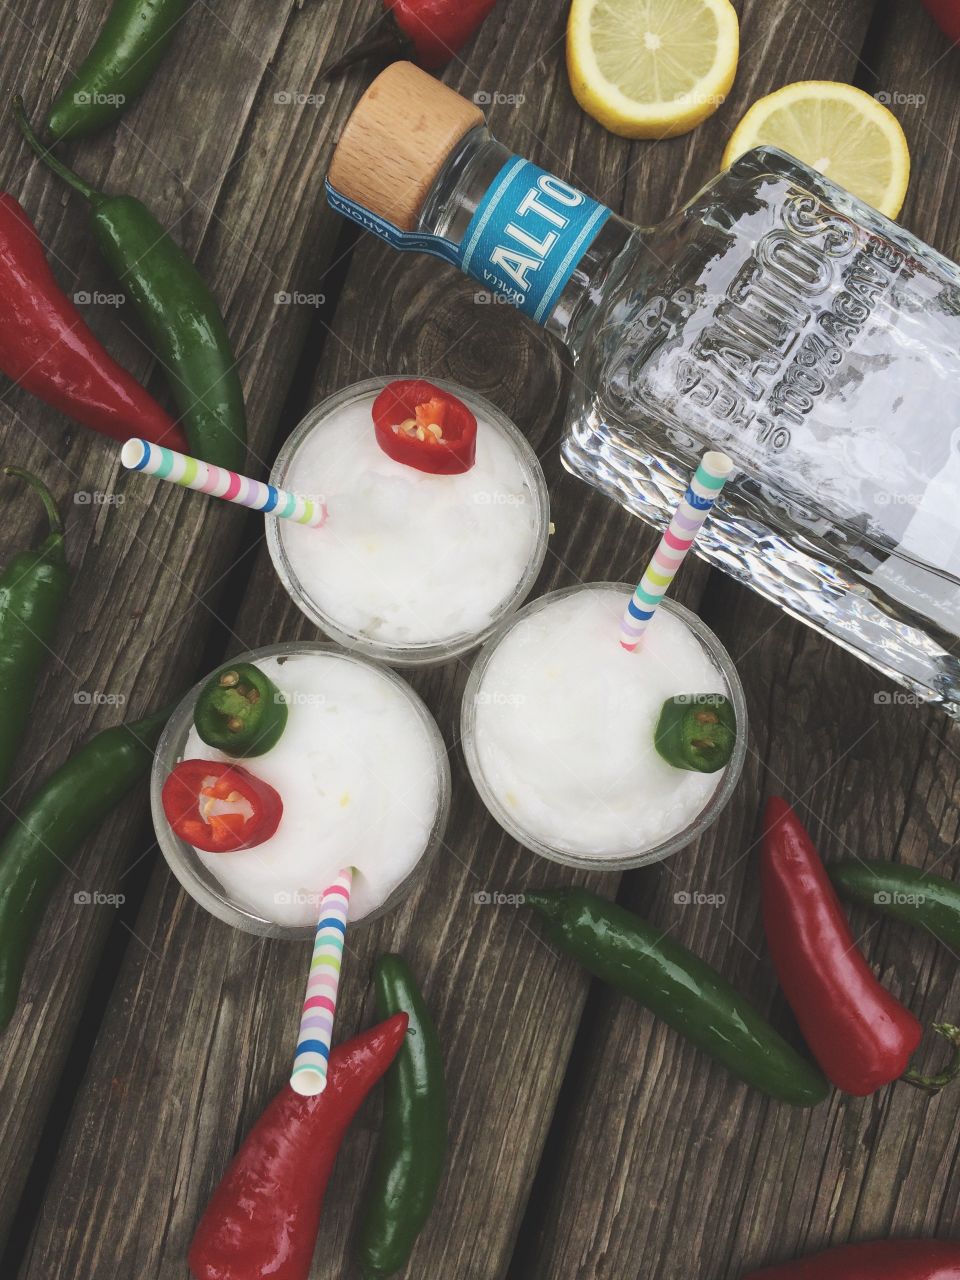 Lemon, altos tequila, & fresh pepper sorbet. Mixed perfectly enough to enjoy through a straw. Happy Summer! 